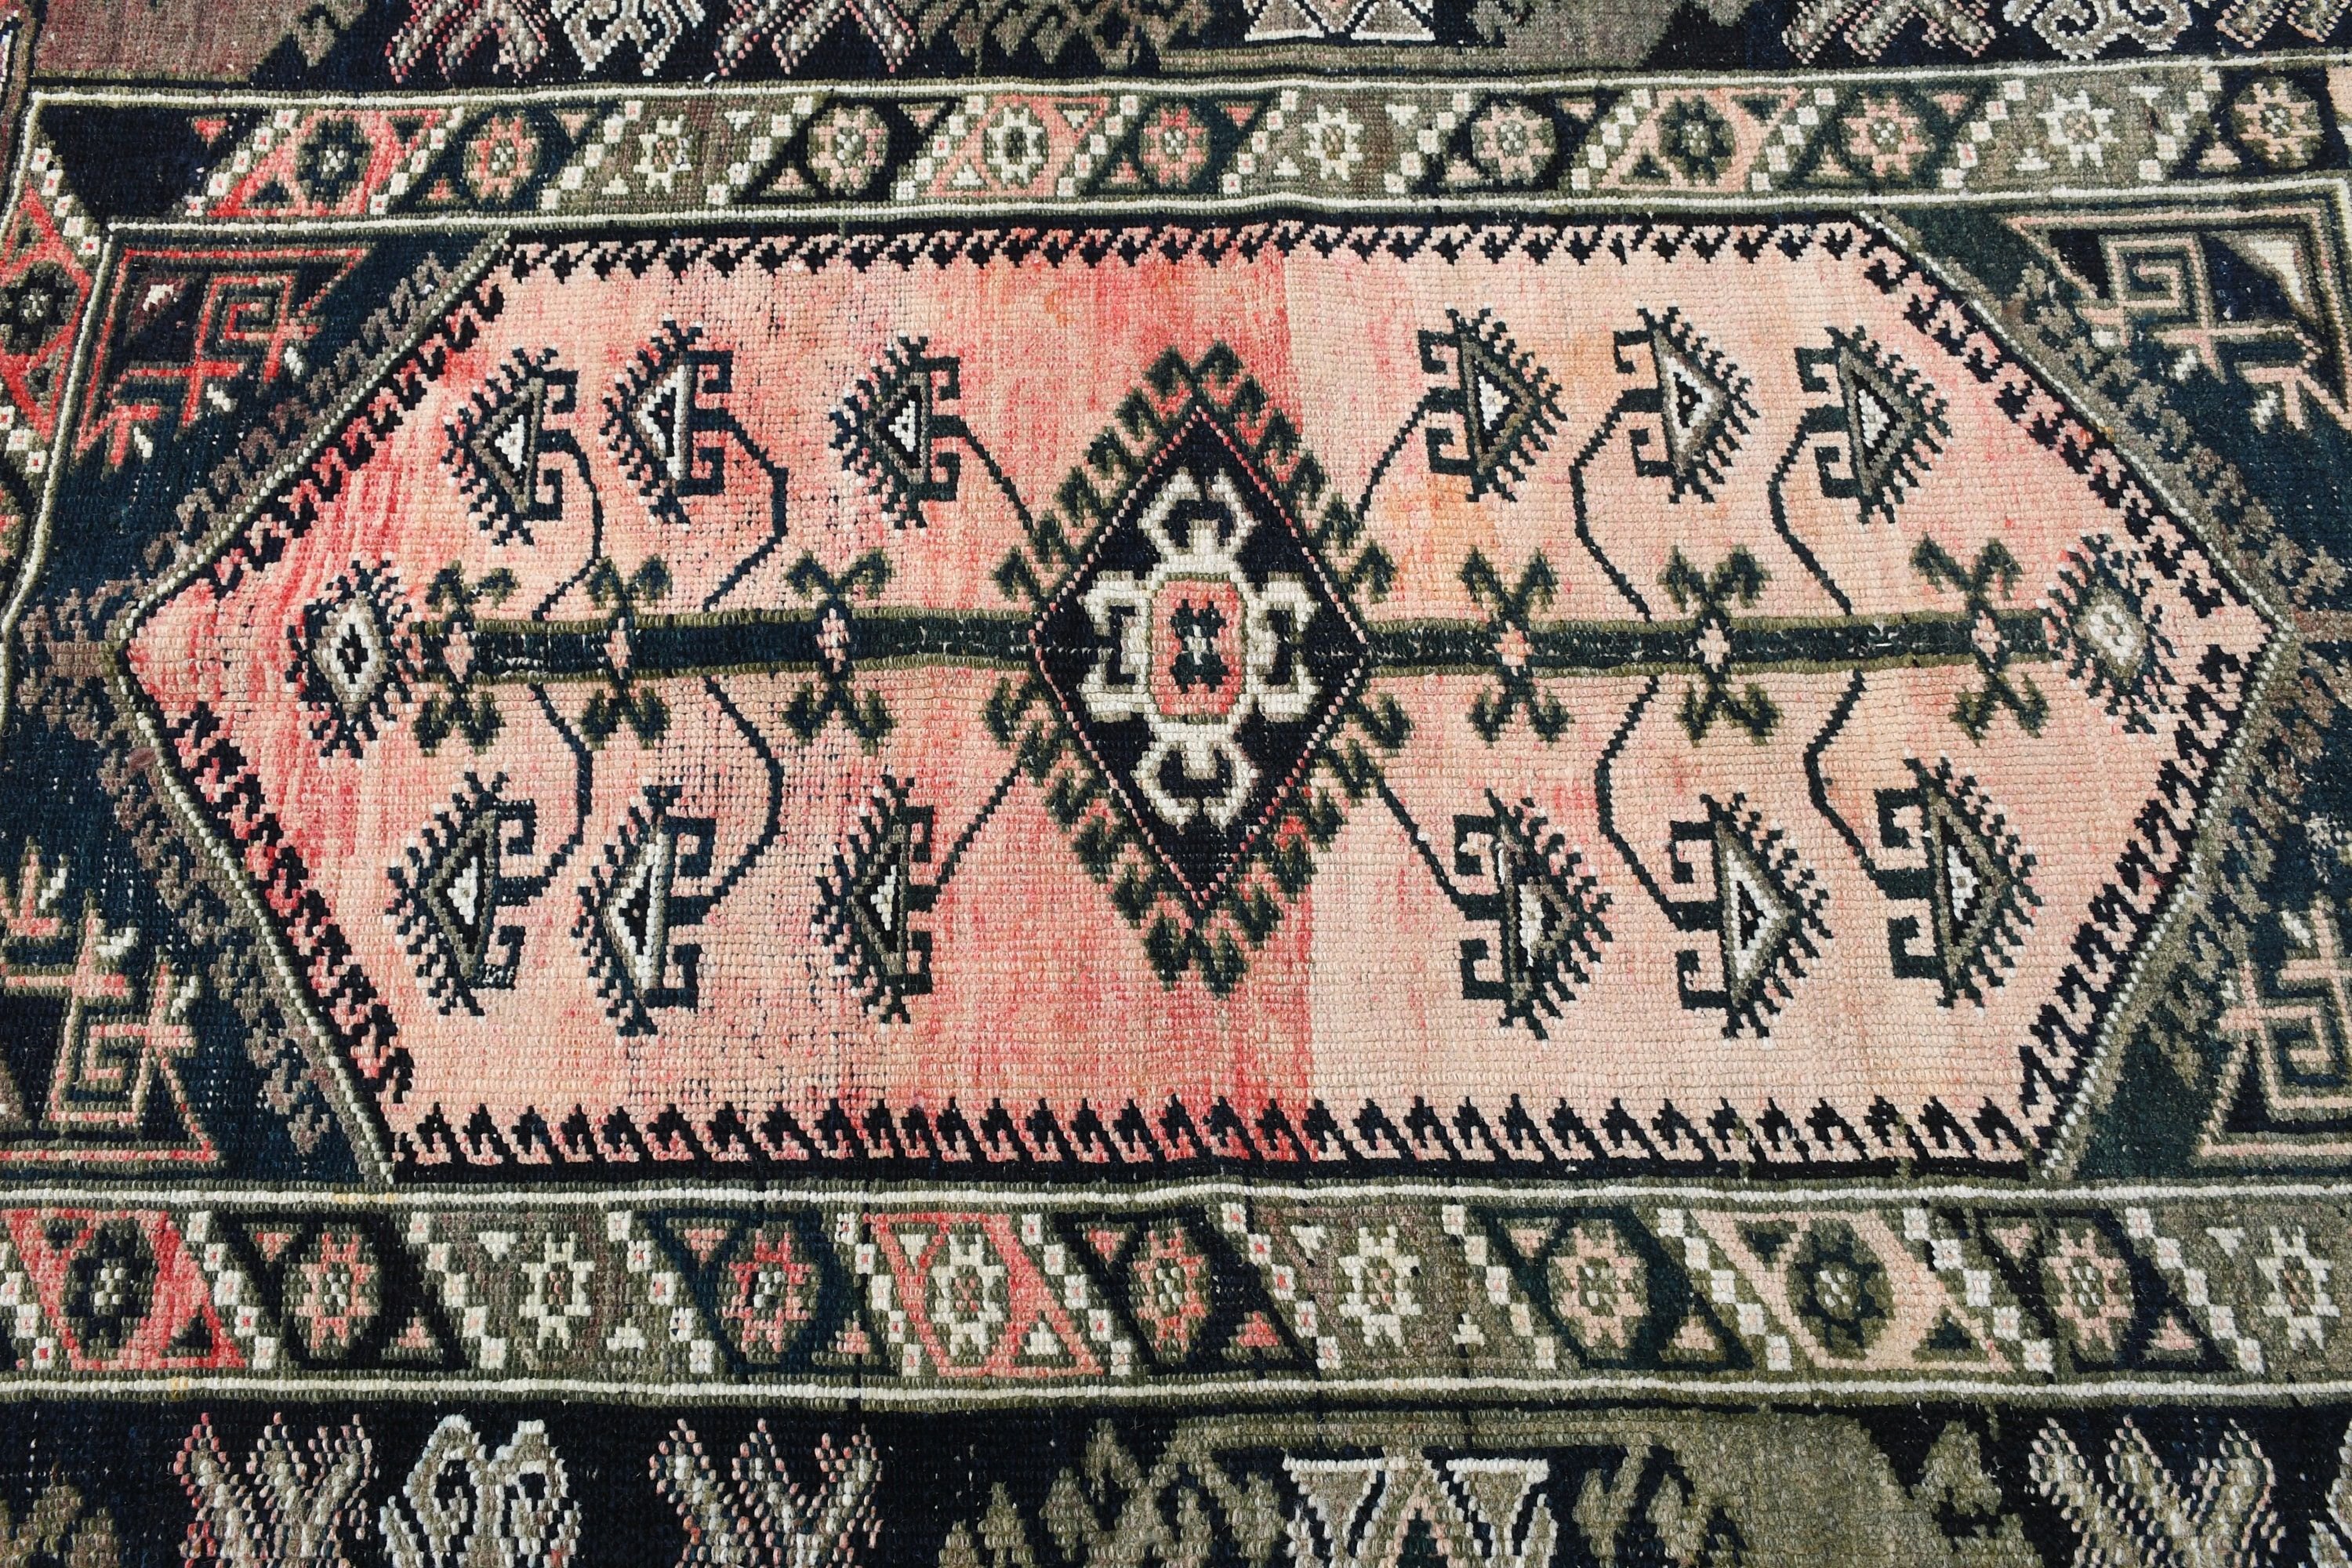 Vintage Rug, Turkish Rugs, Kitchen Rug, Art Rug, Anatolian Rug, 4.6x5 ft Accent Rugs, Nursery Rug, Oriental Rugs, Black Moroccan Rugs